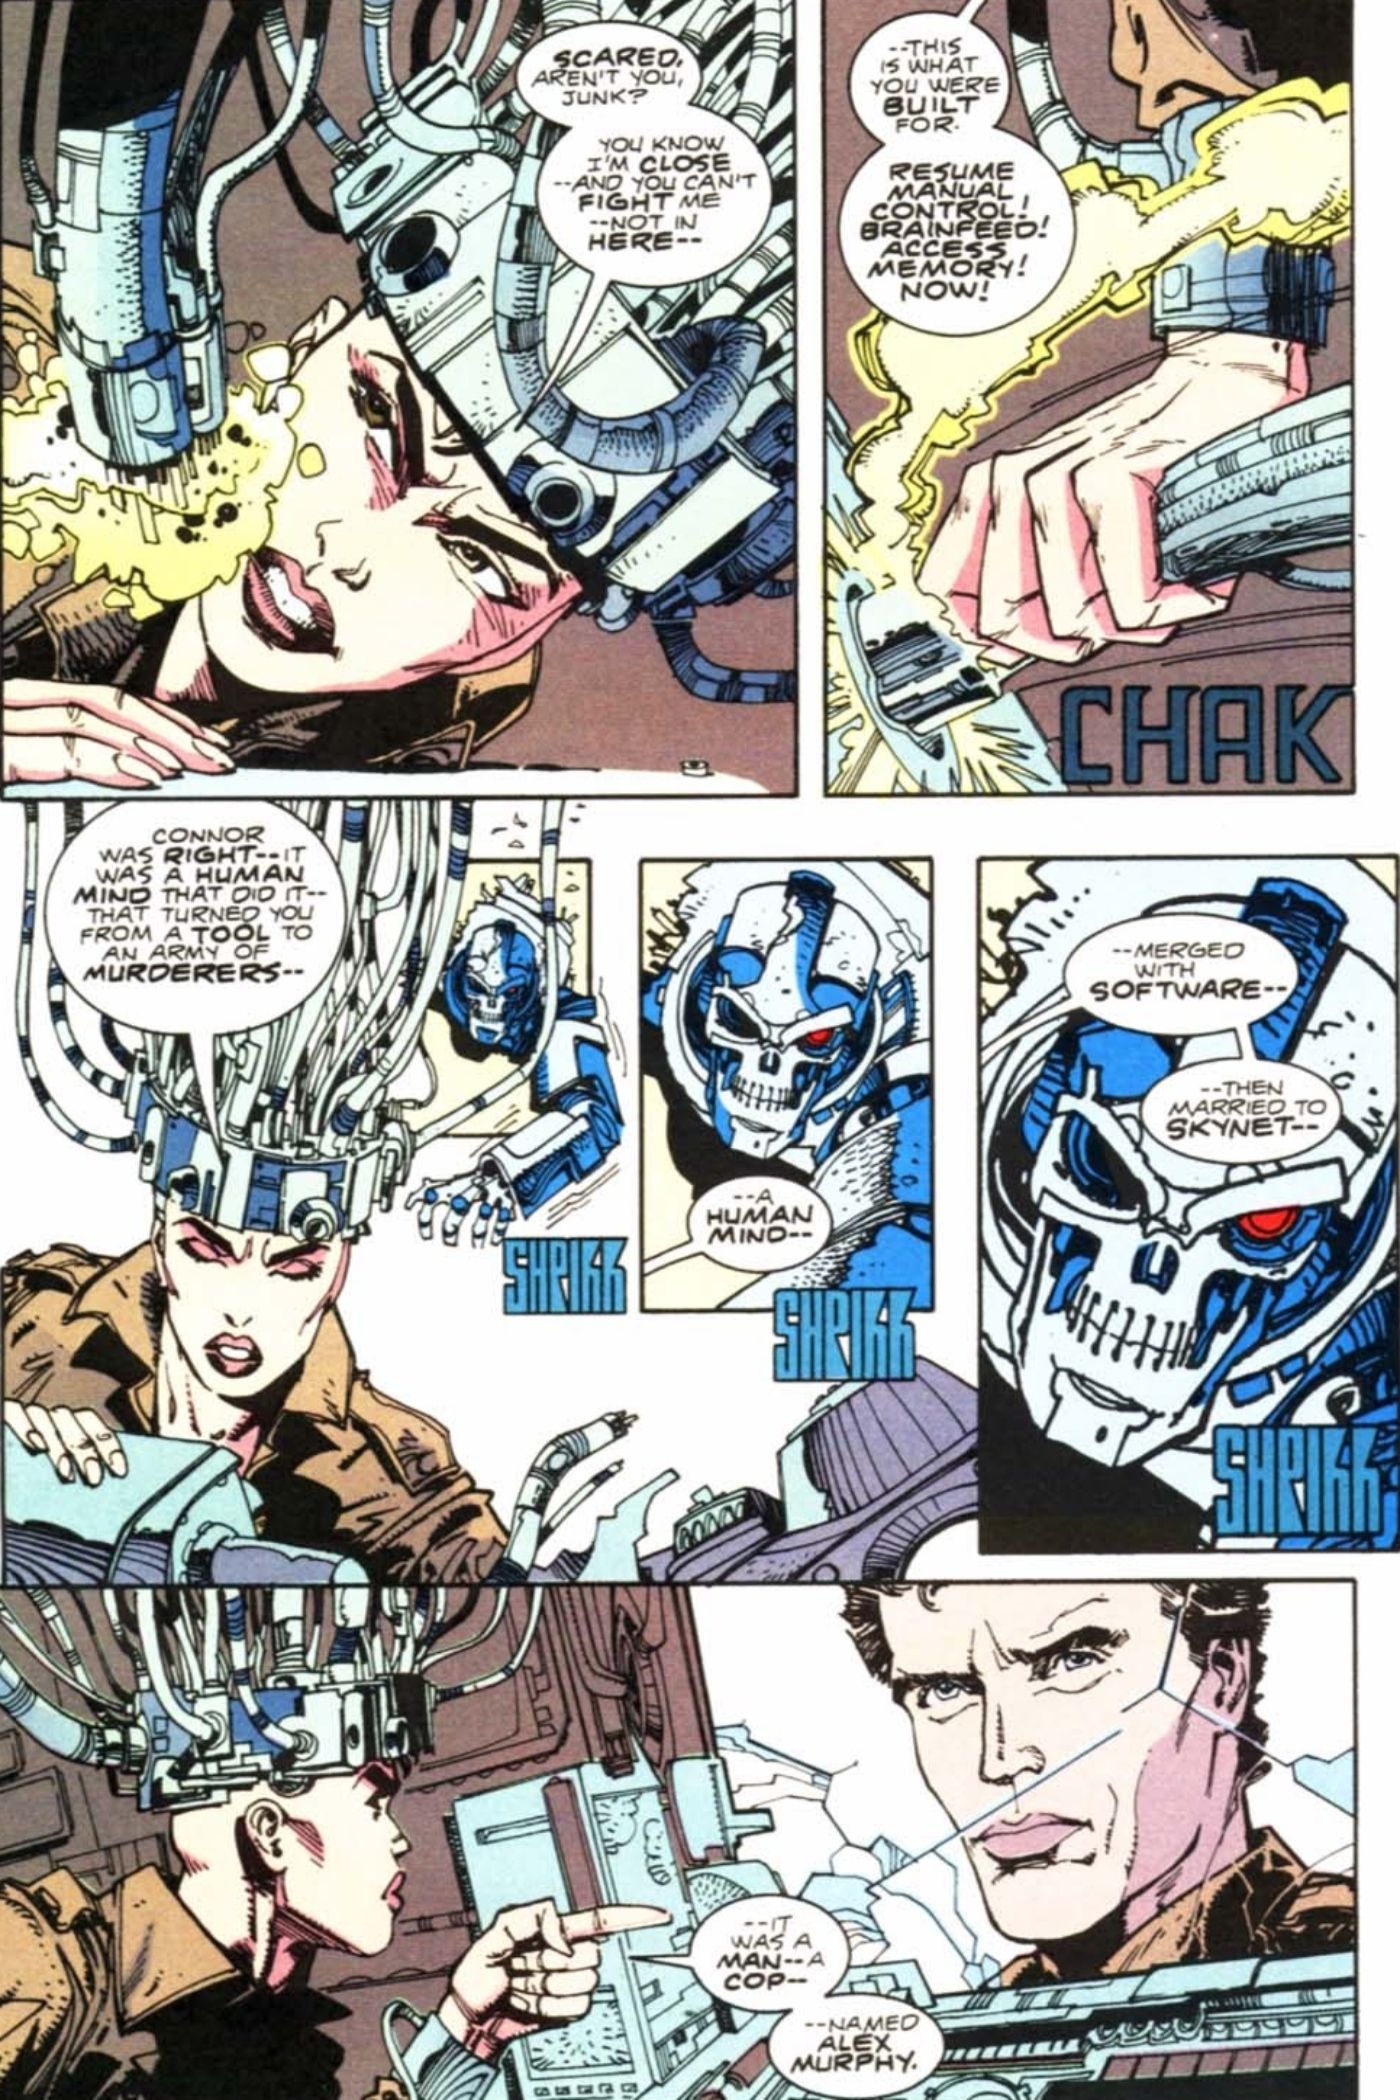 RoboCop vs Terminator comic.